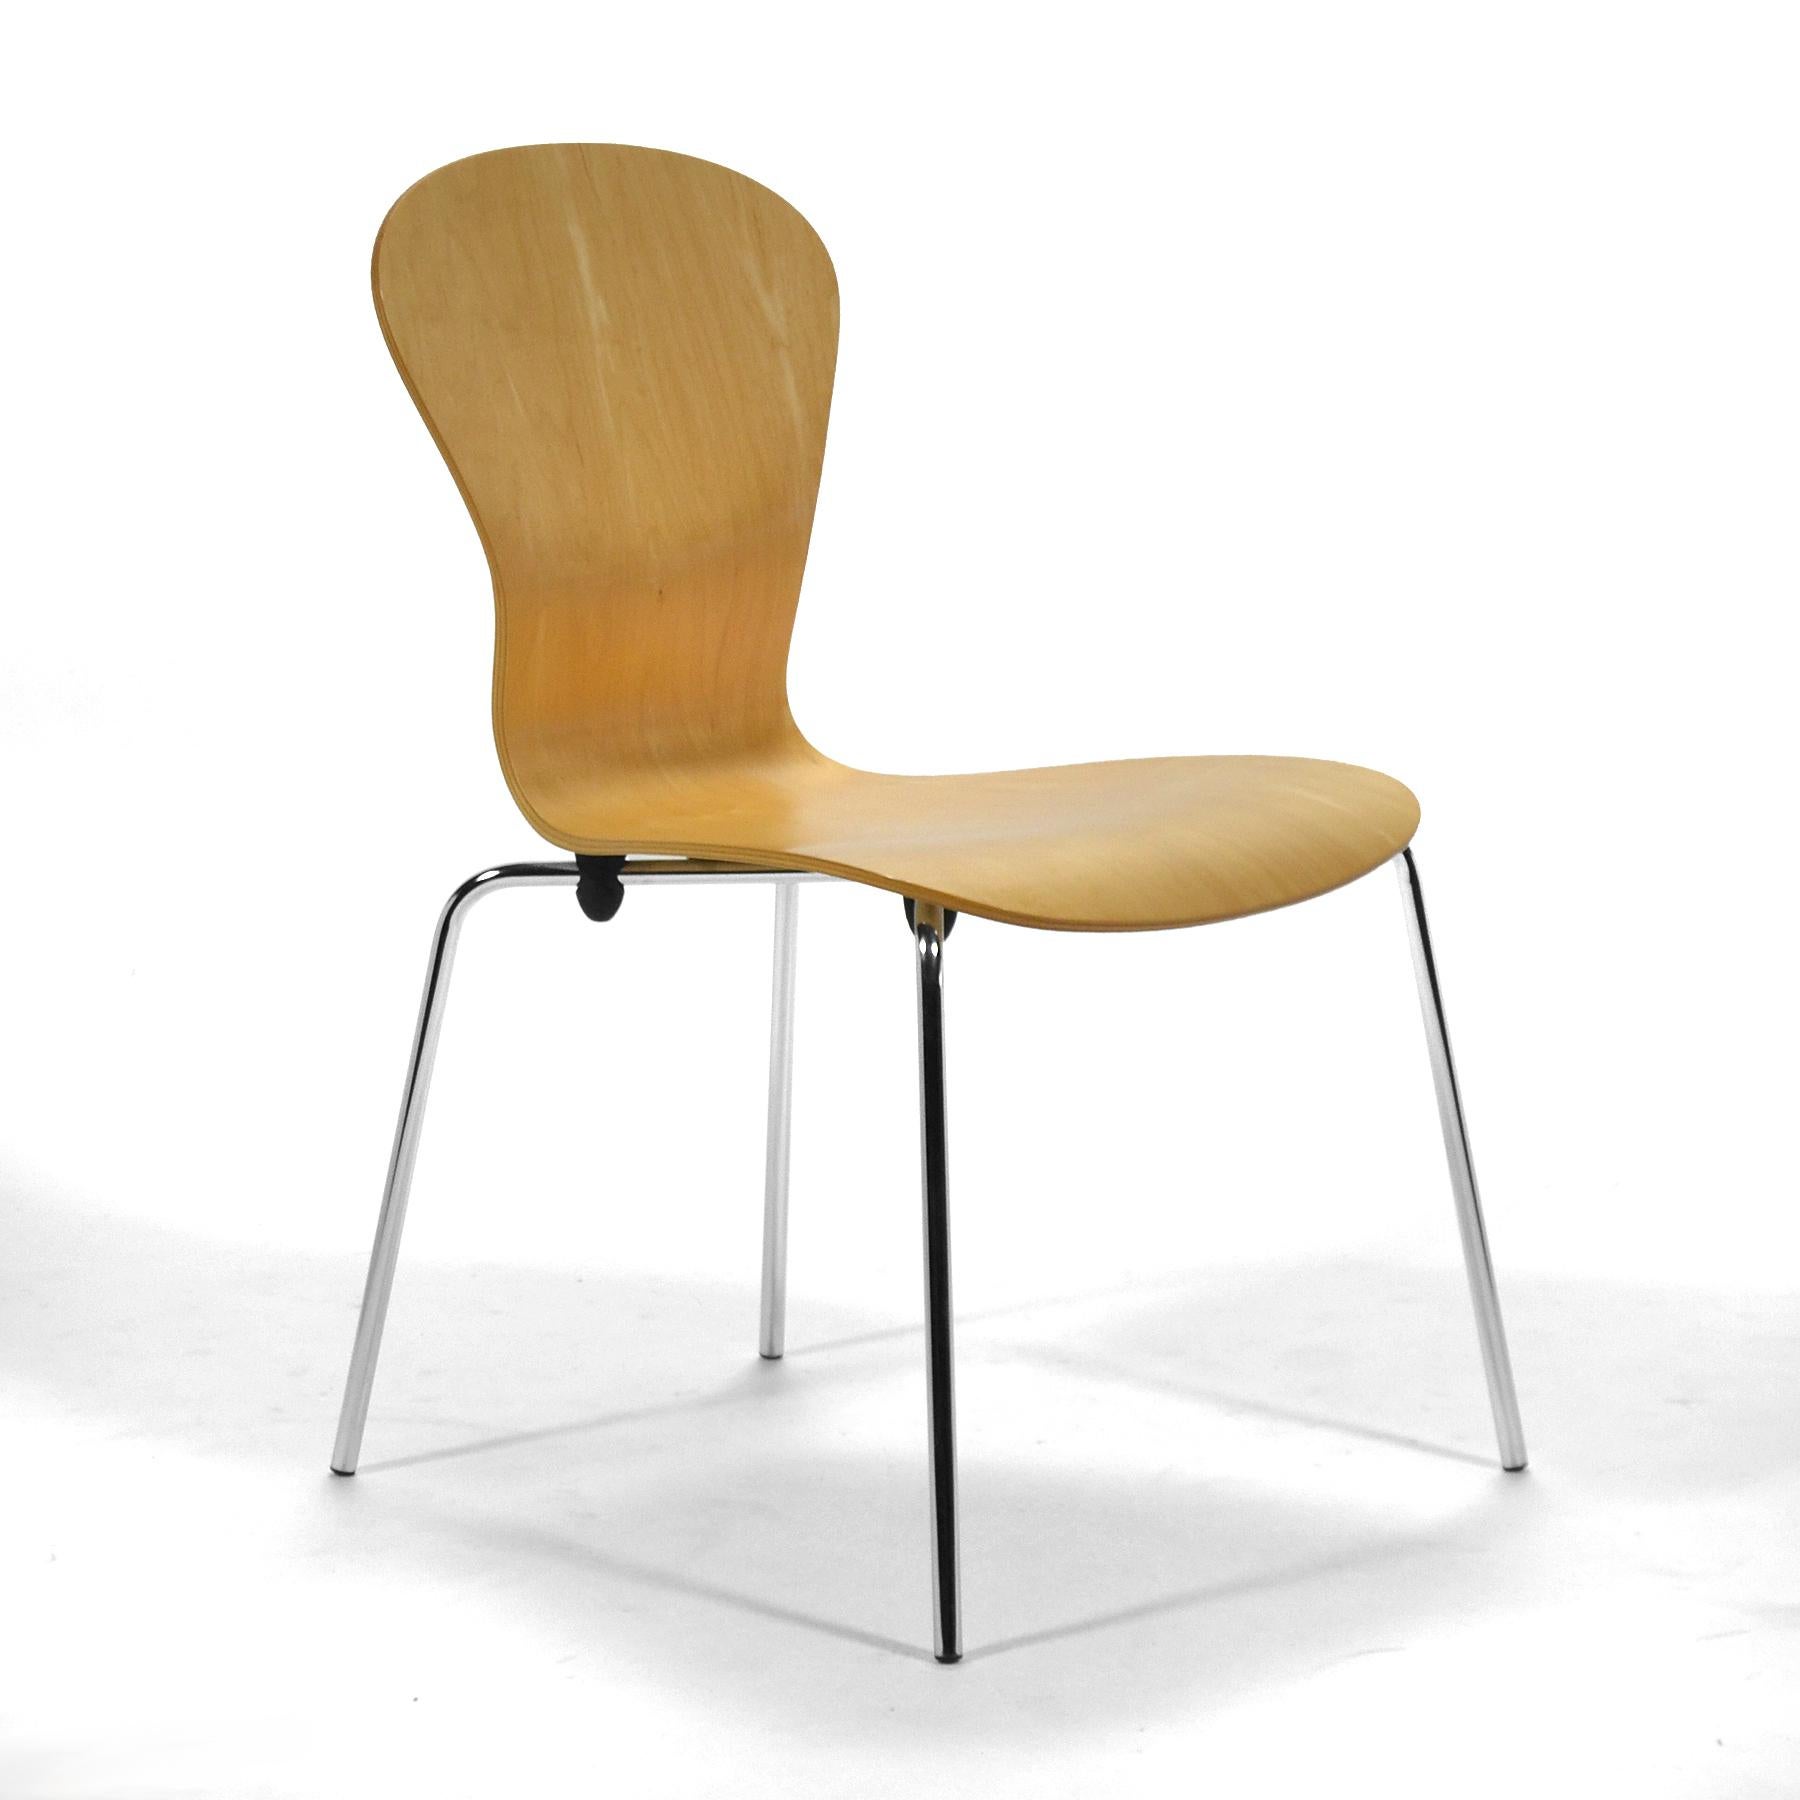 American Set of 6 Ross Lovegrove “Sprite” Chairs